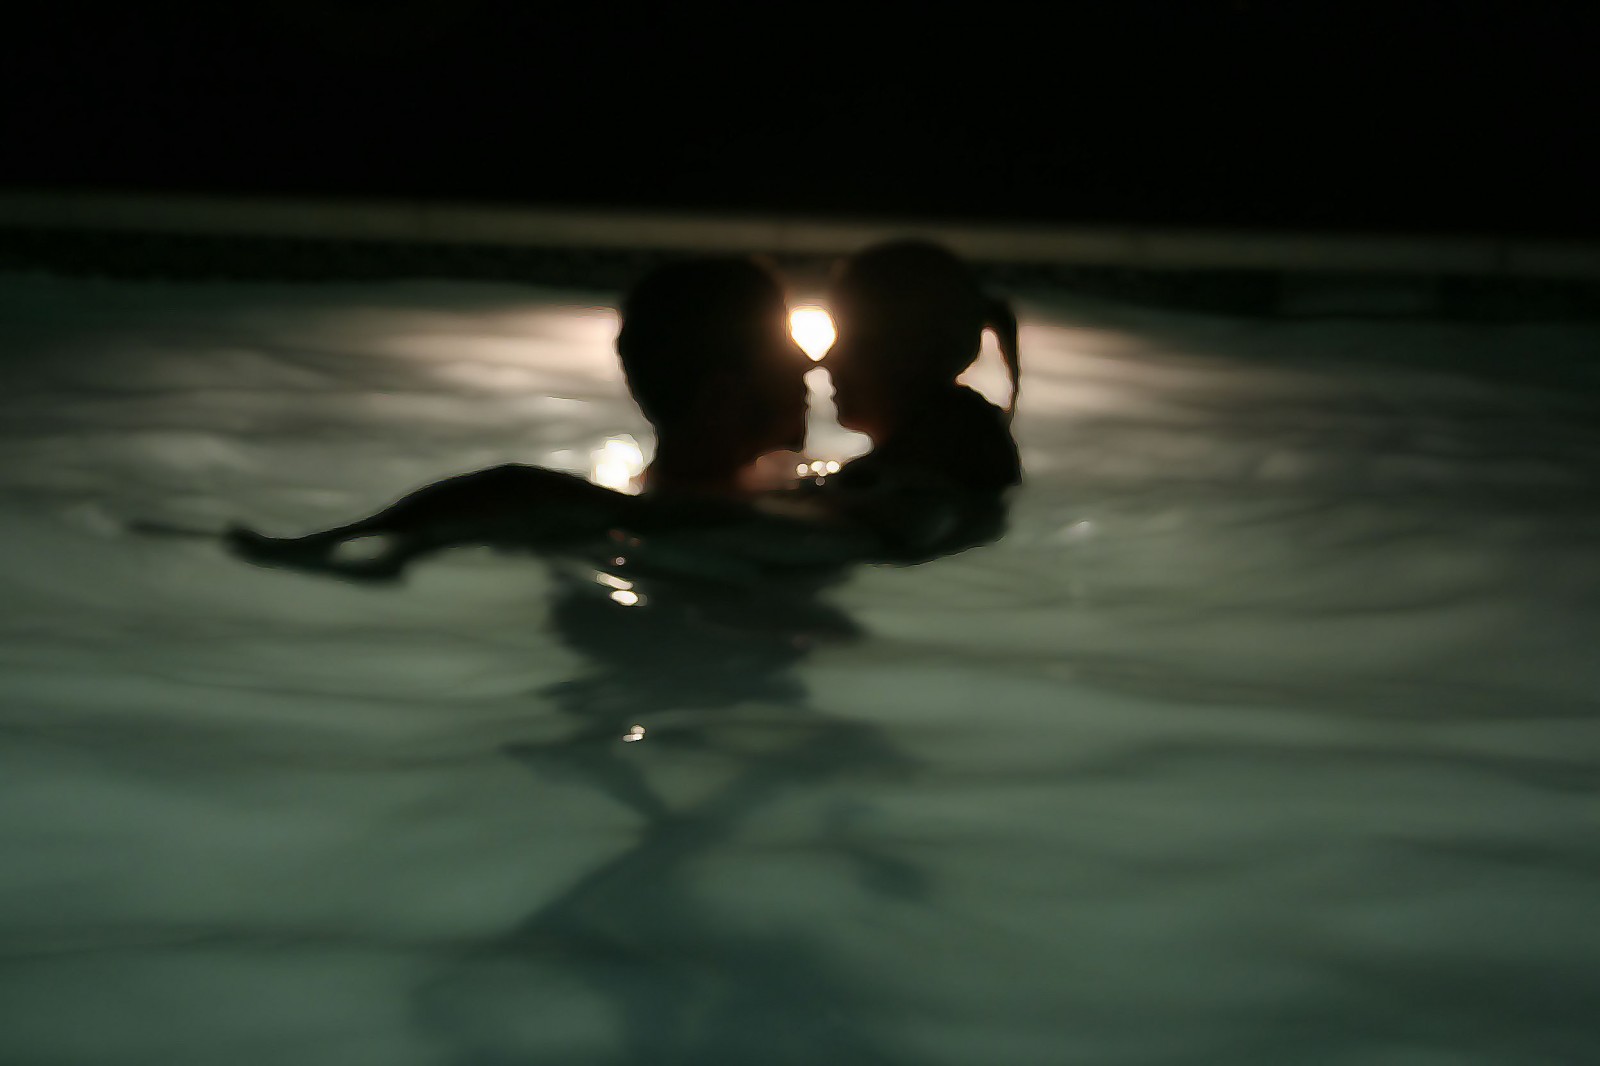 Wallpaper, summer, love, pool, silhouette, night, swimming, happy, kiss, couple, romantic, loveandlife 2496x1664